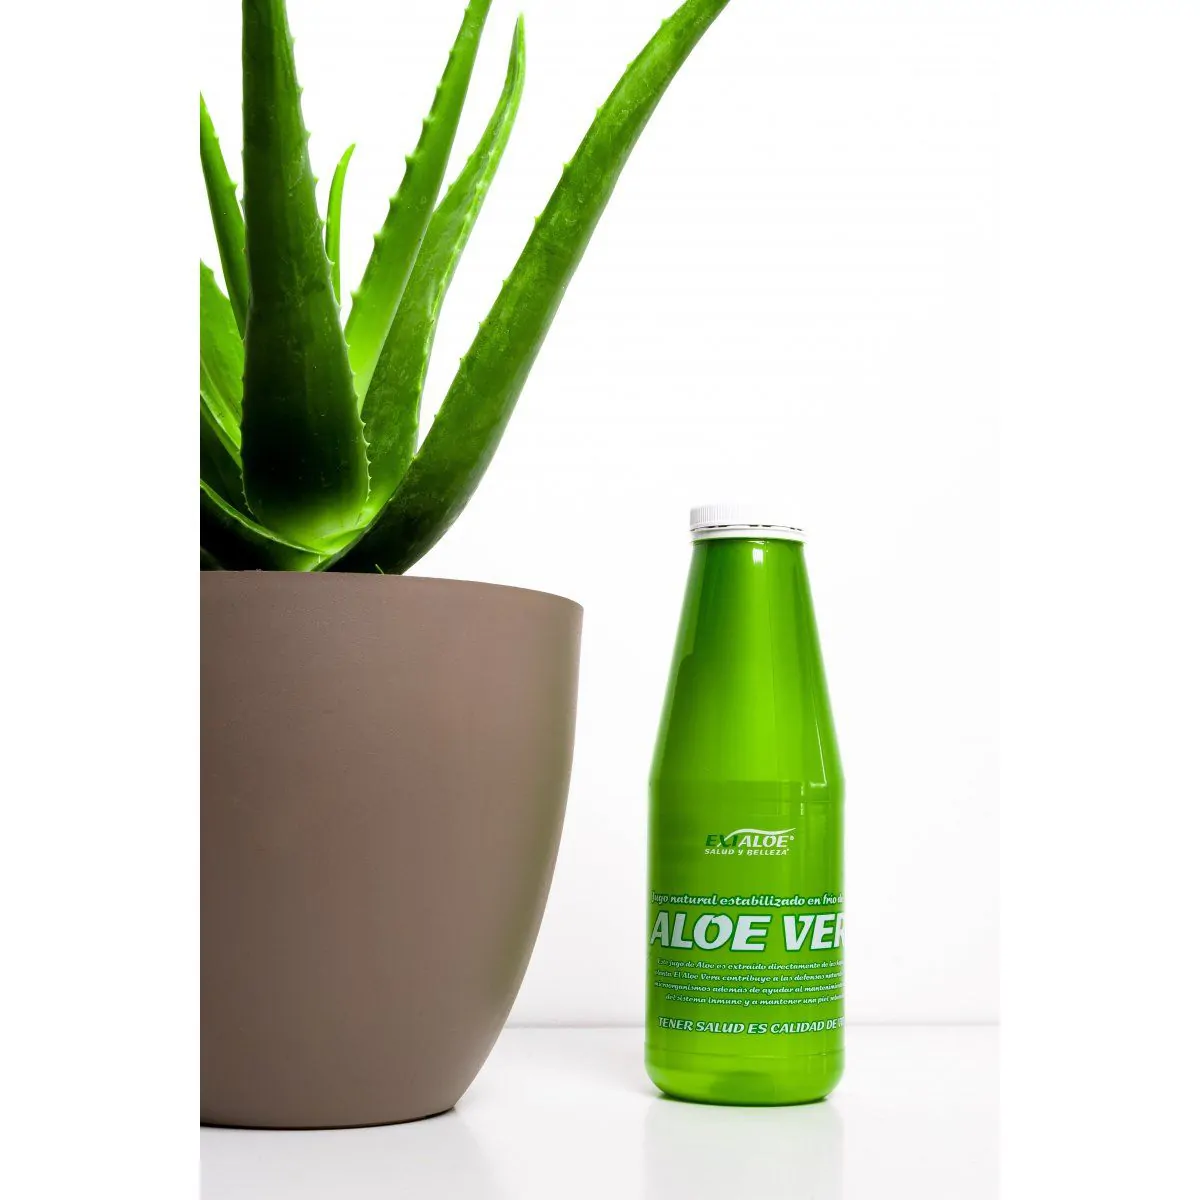 Comprar Jugo de Aloe Vera 100% Natural 1 litro - Ibizaloe